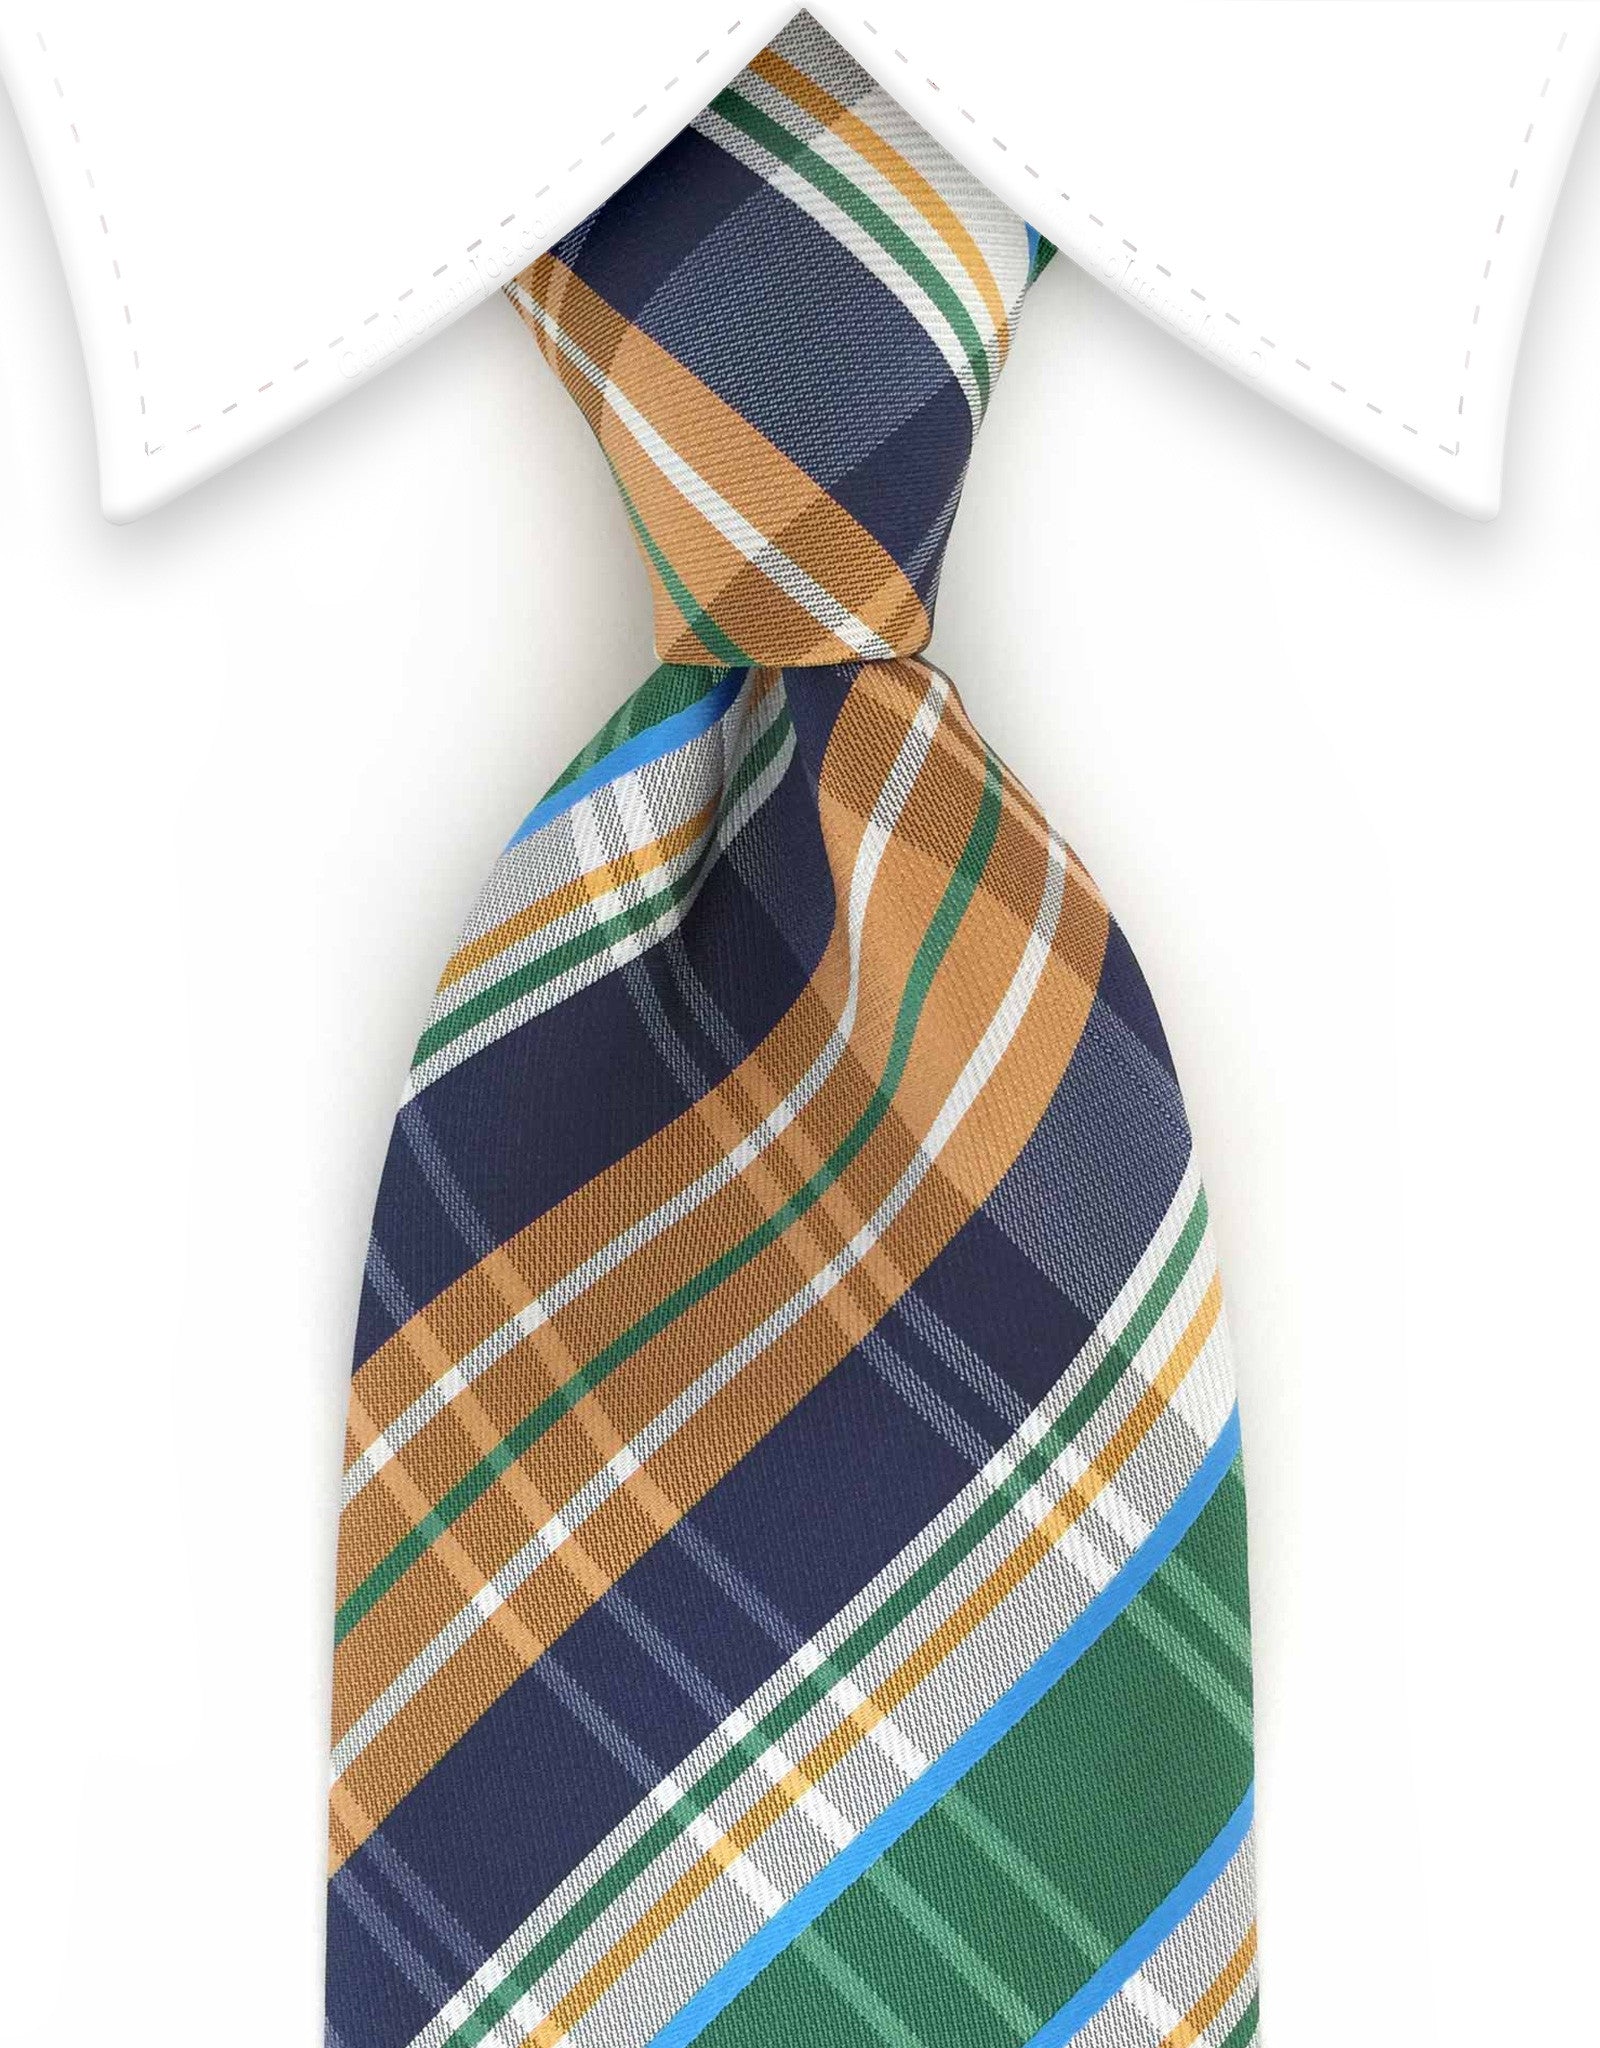 Caramel, Green & Navy Plaid Tie